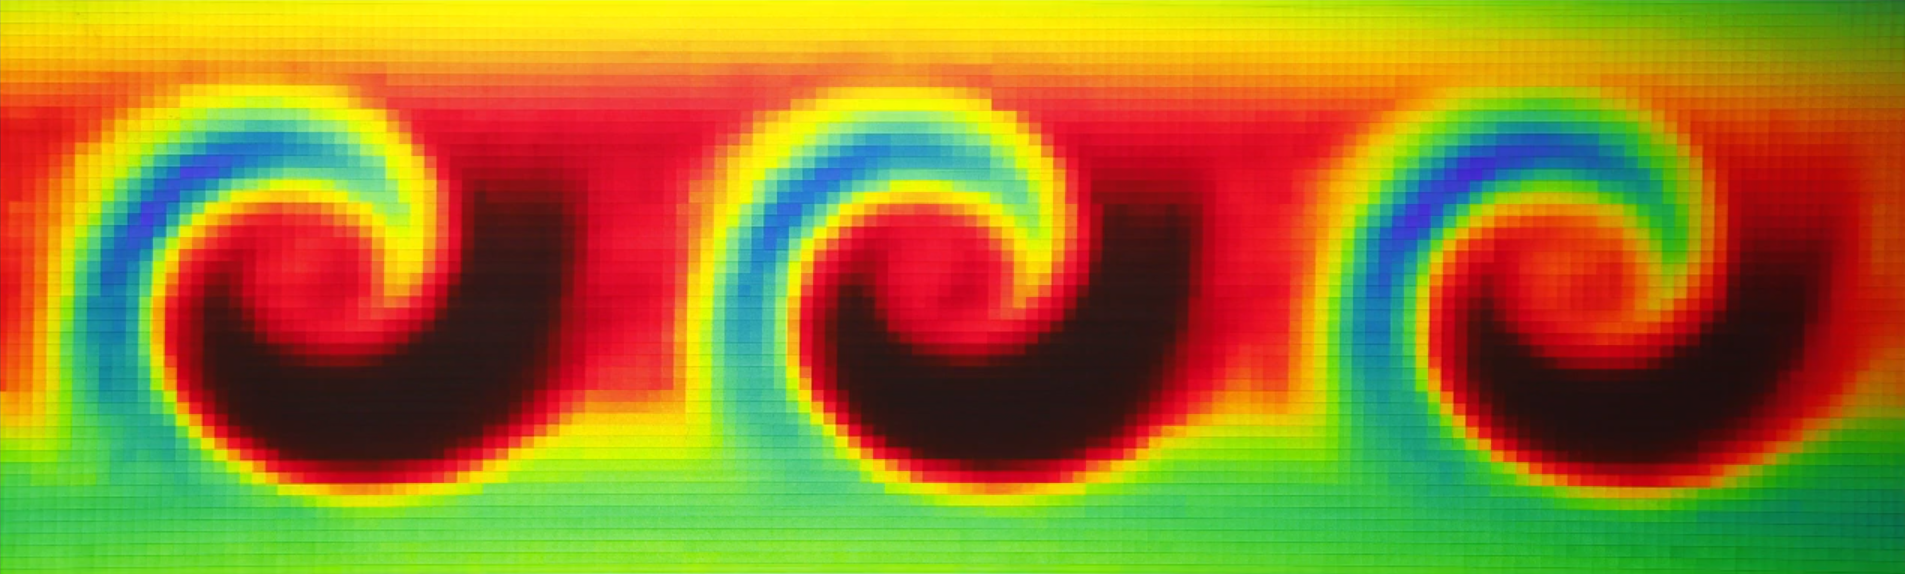 Waldemar Mattis-Teutsch - Maelstrom, H.O.E. Hologram, W:150 cm x H:50 cm, 2000